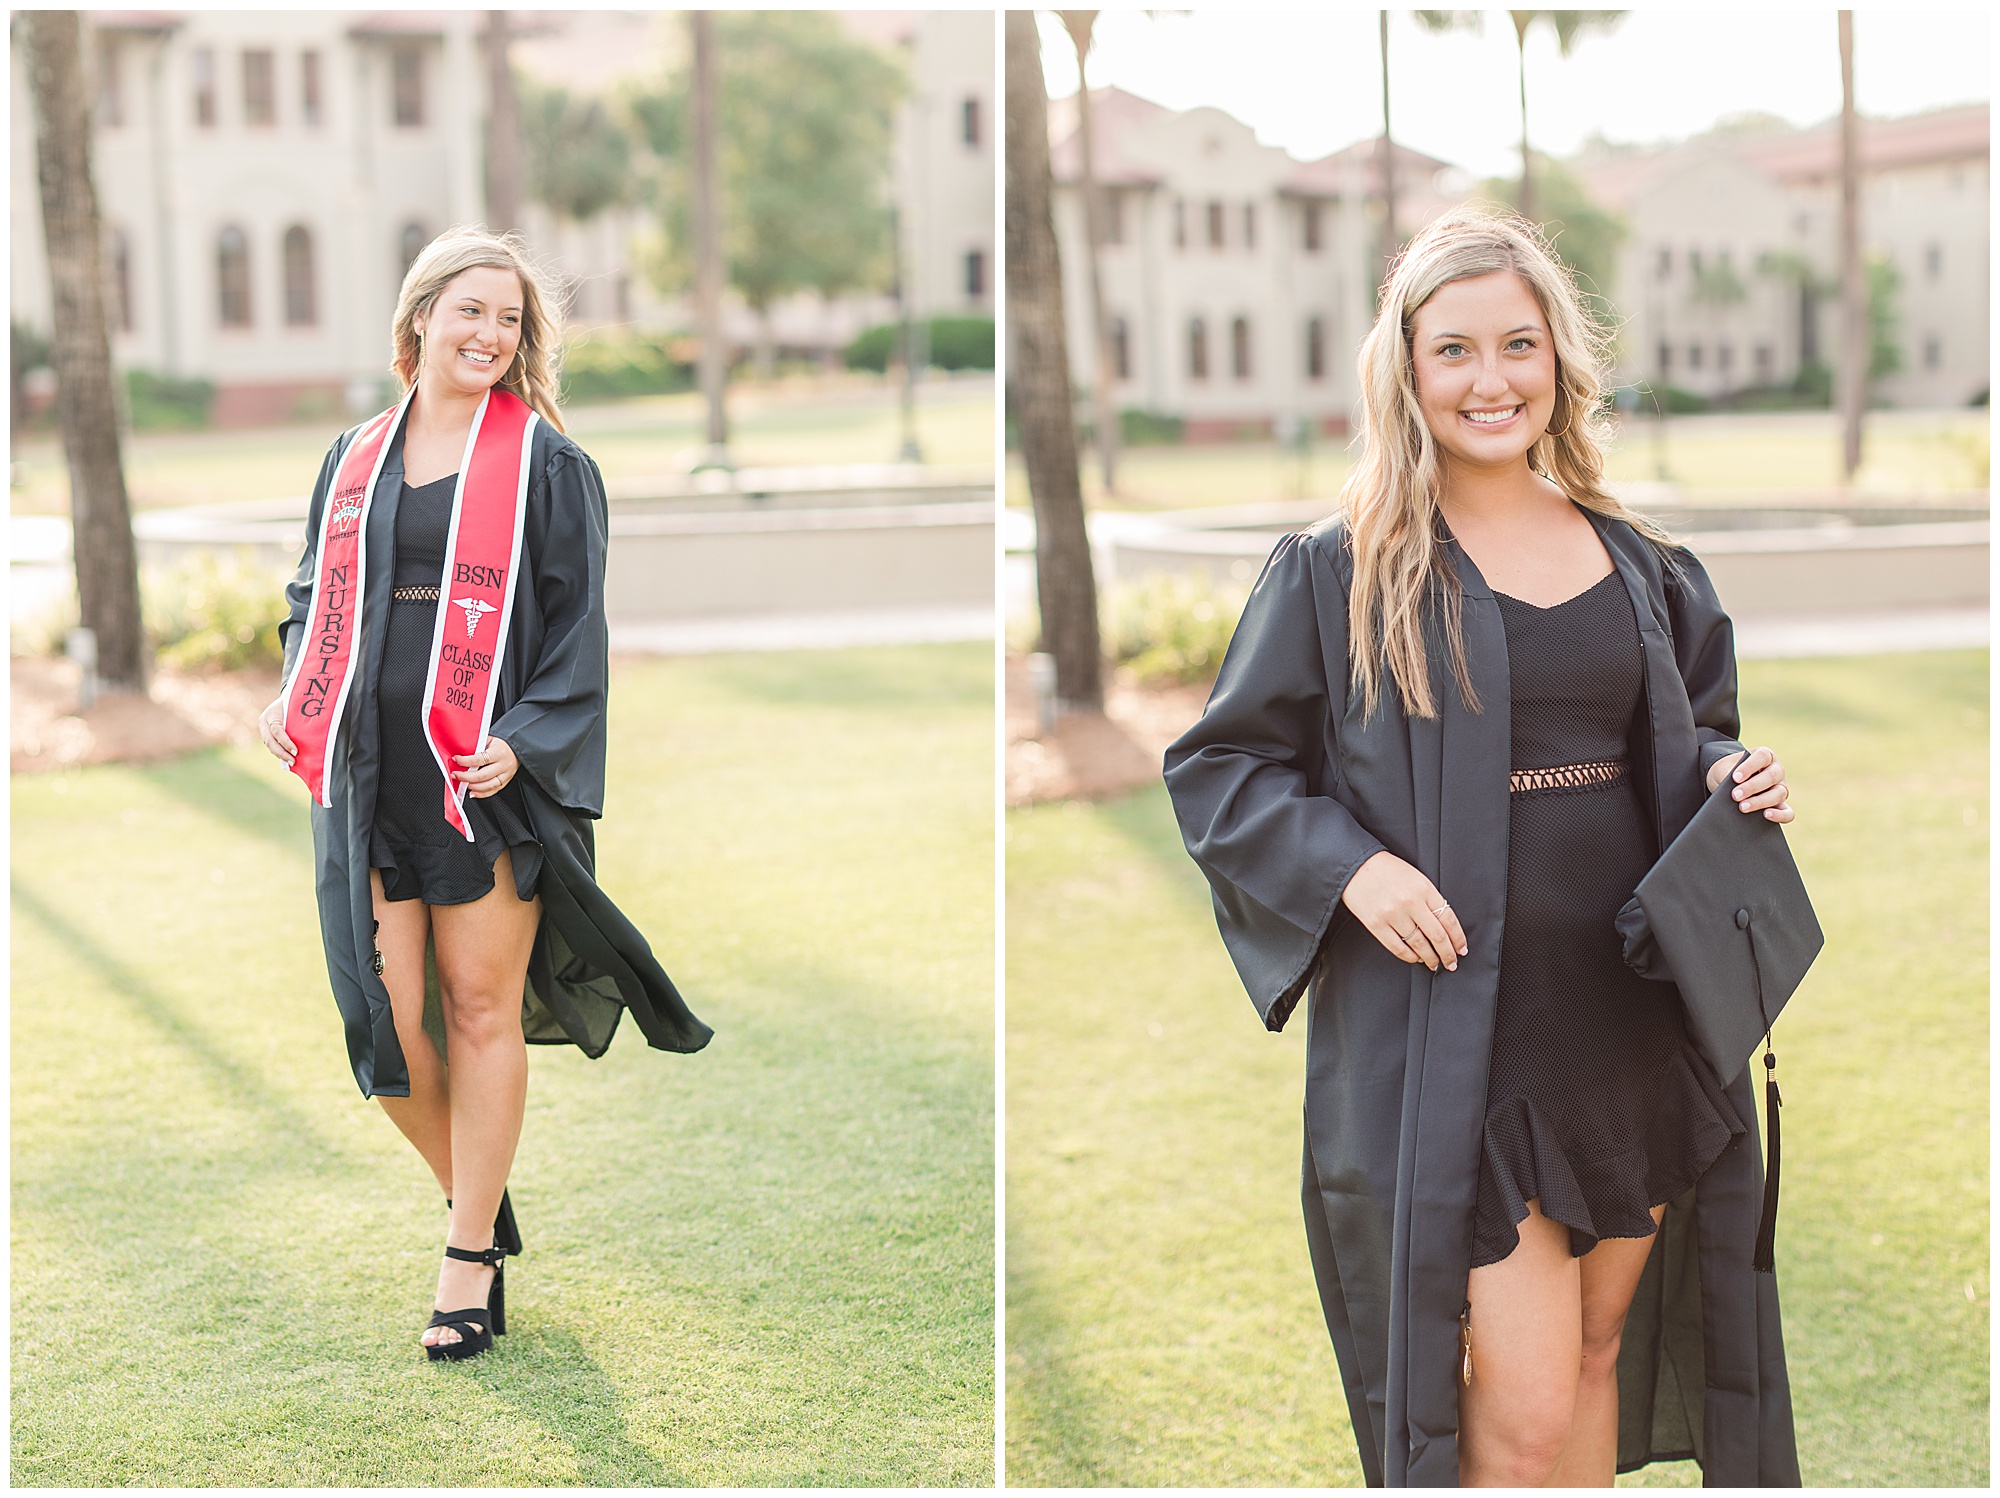 Bailey, Graduation Photos, Valdosta State University, Kelley Stinson Photography, cap and gown photo session